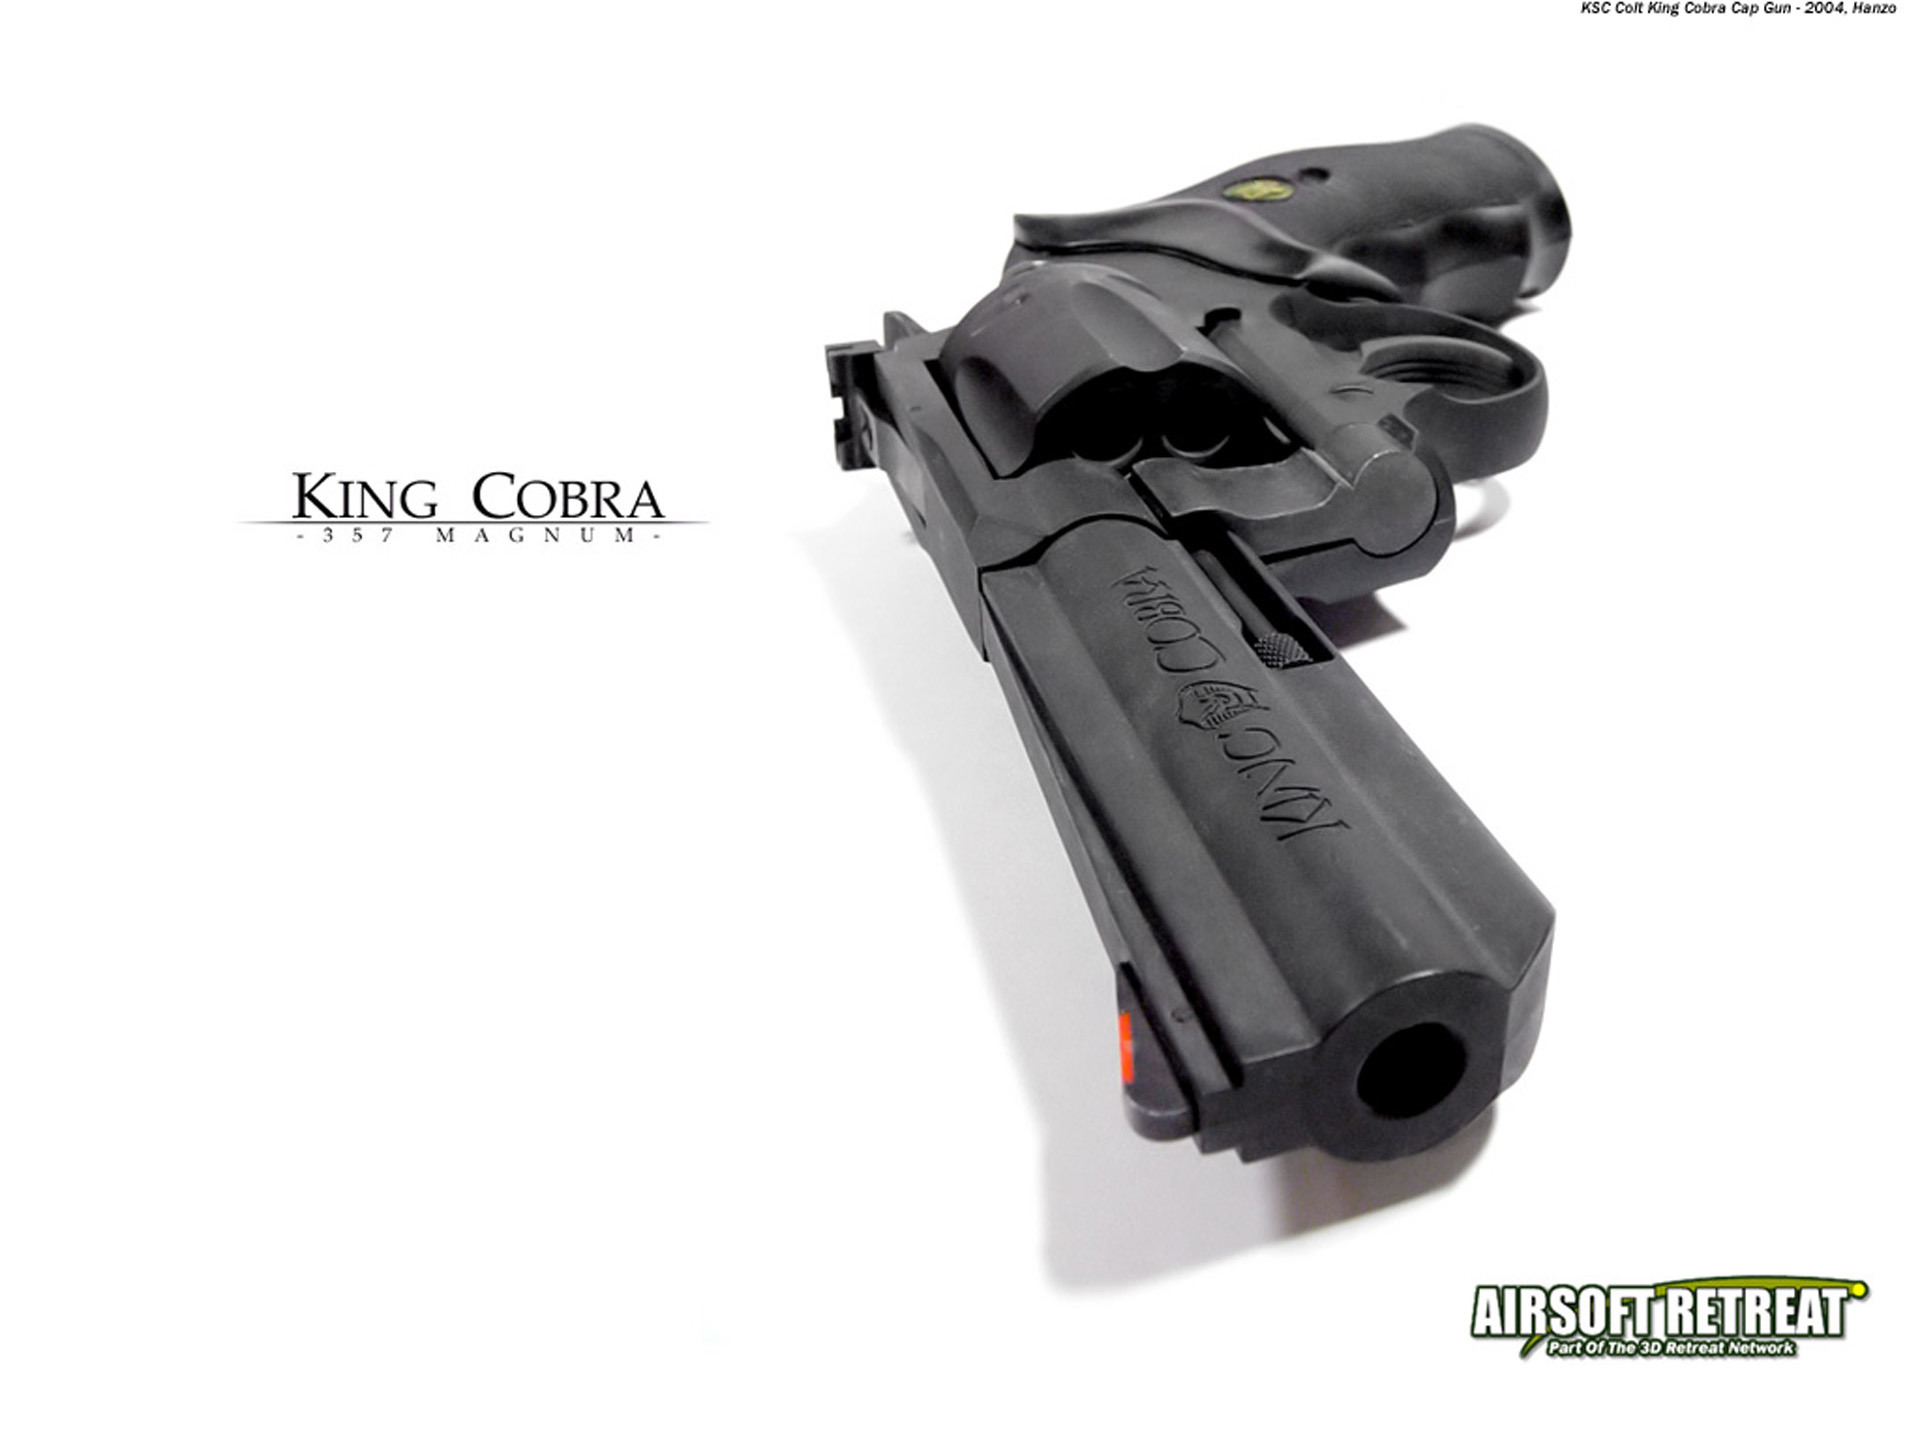 Airsoft King Cobra Revolver HD Wallpaper